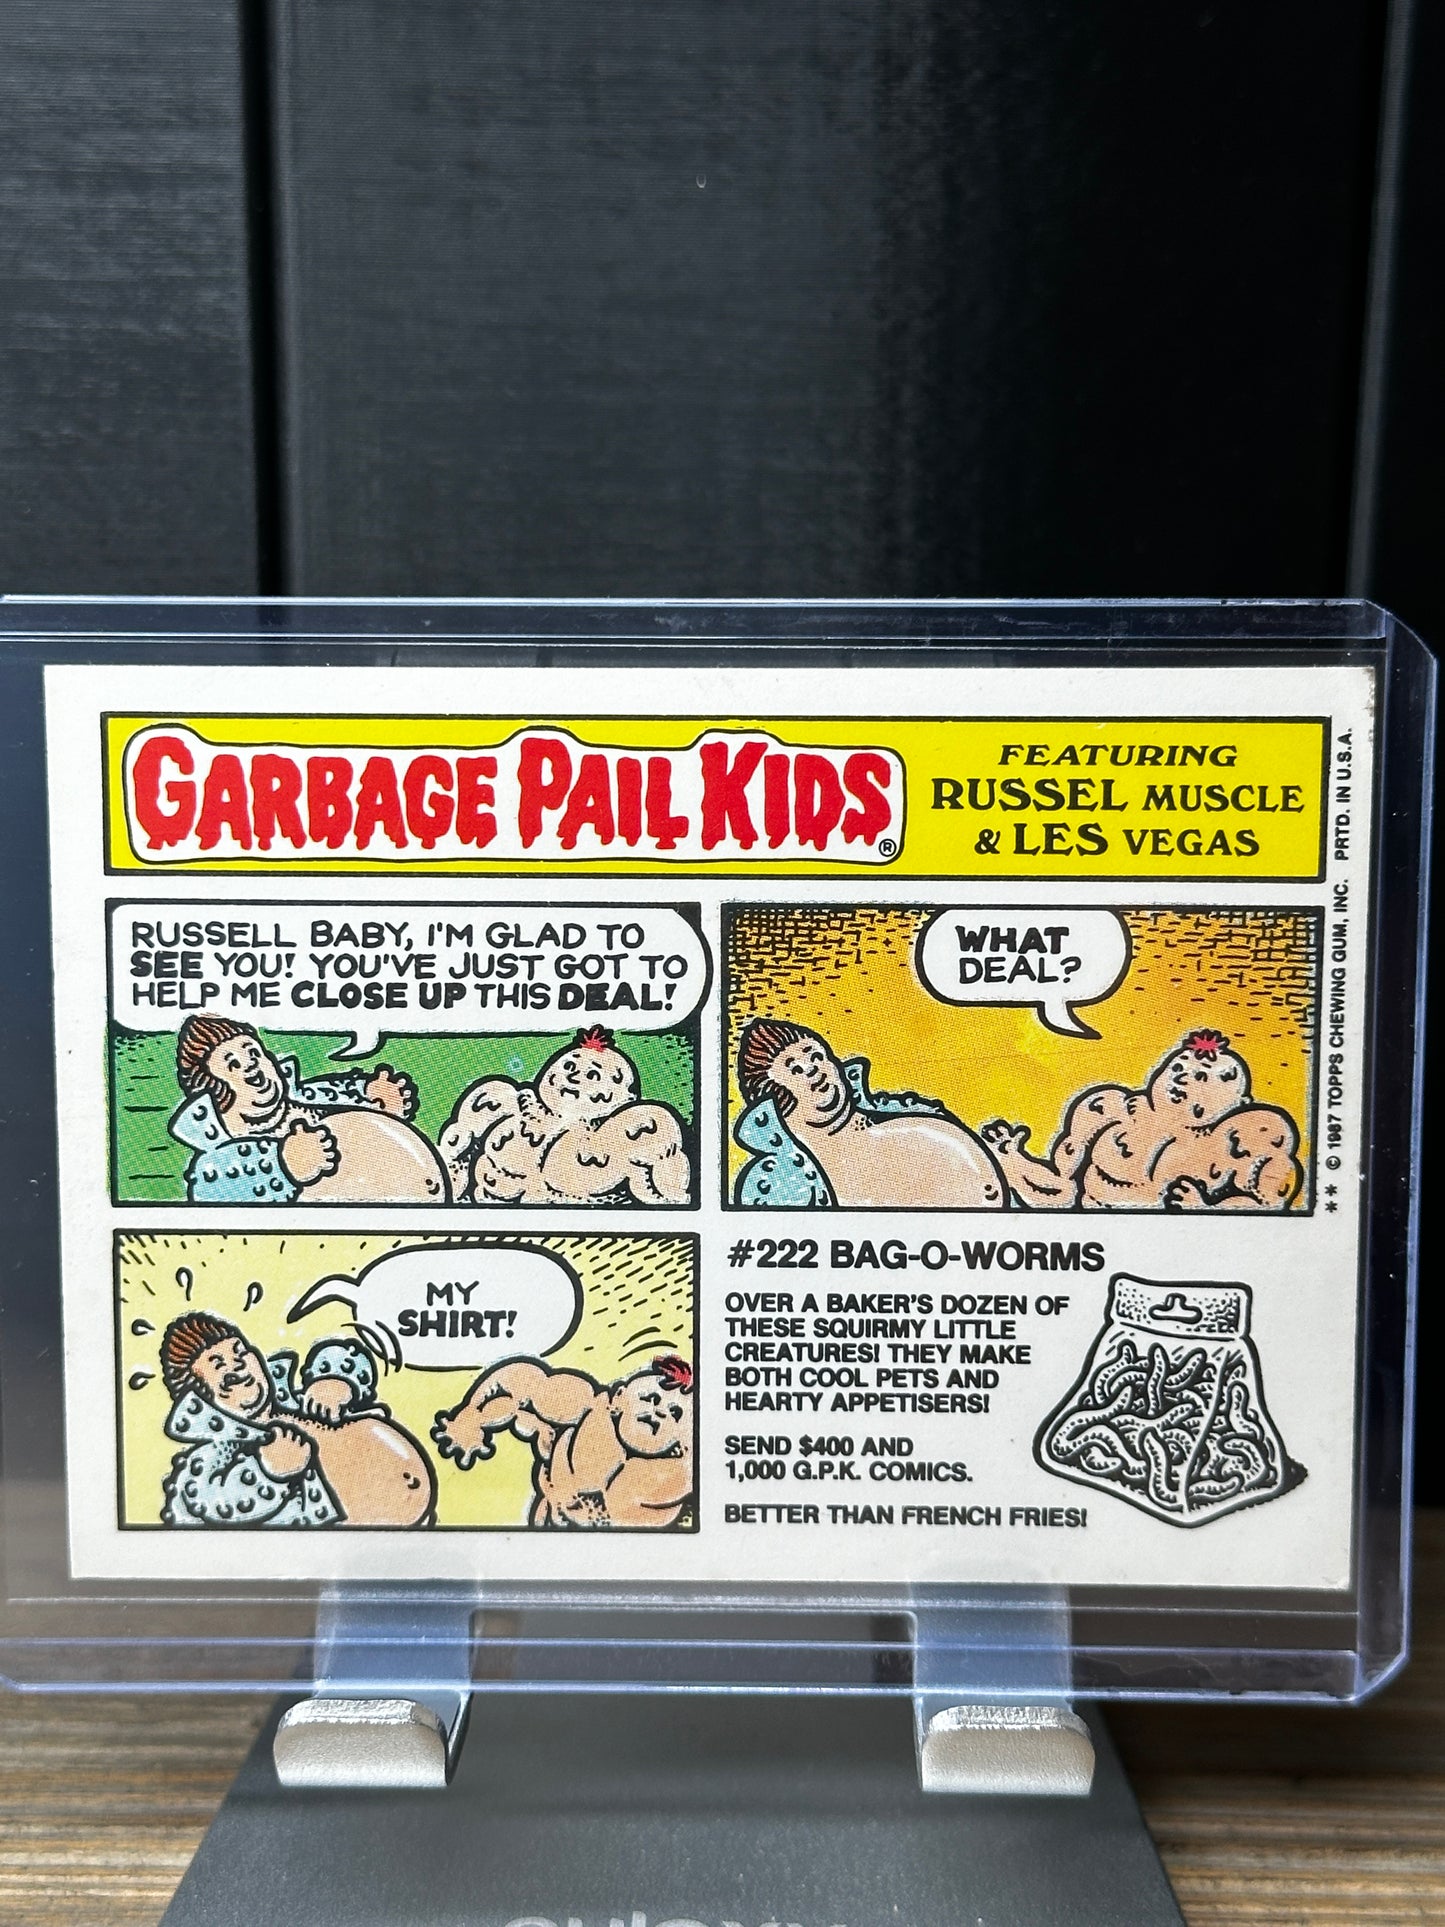 1987 Topps Garbage Pail Kids Series 8 Smoky Joe